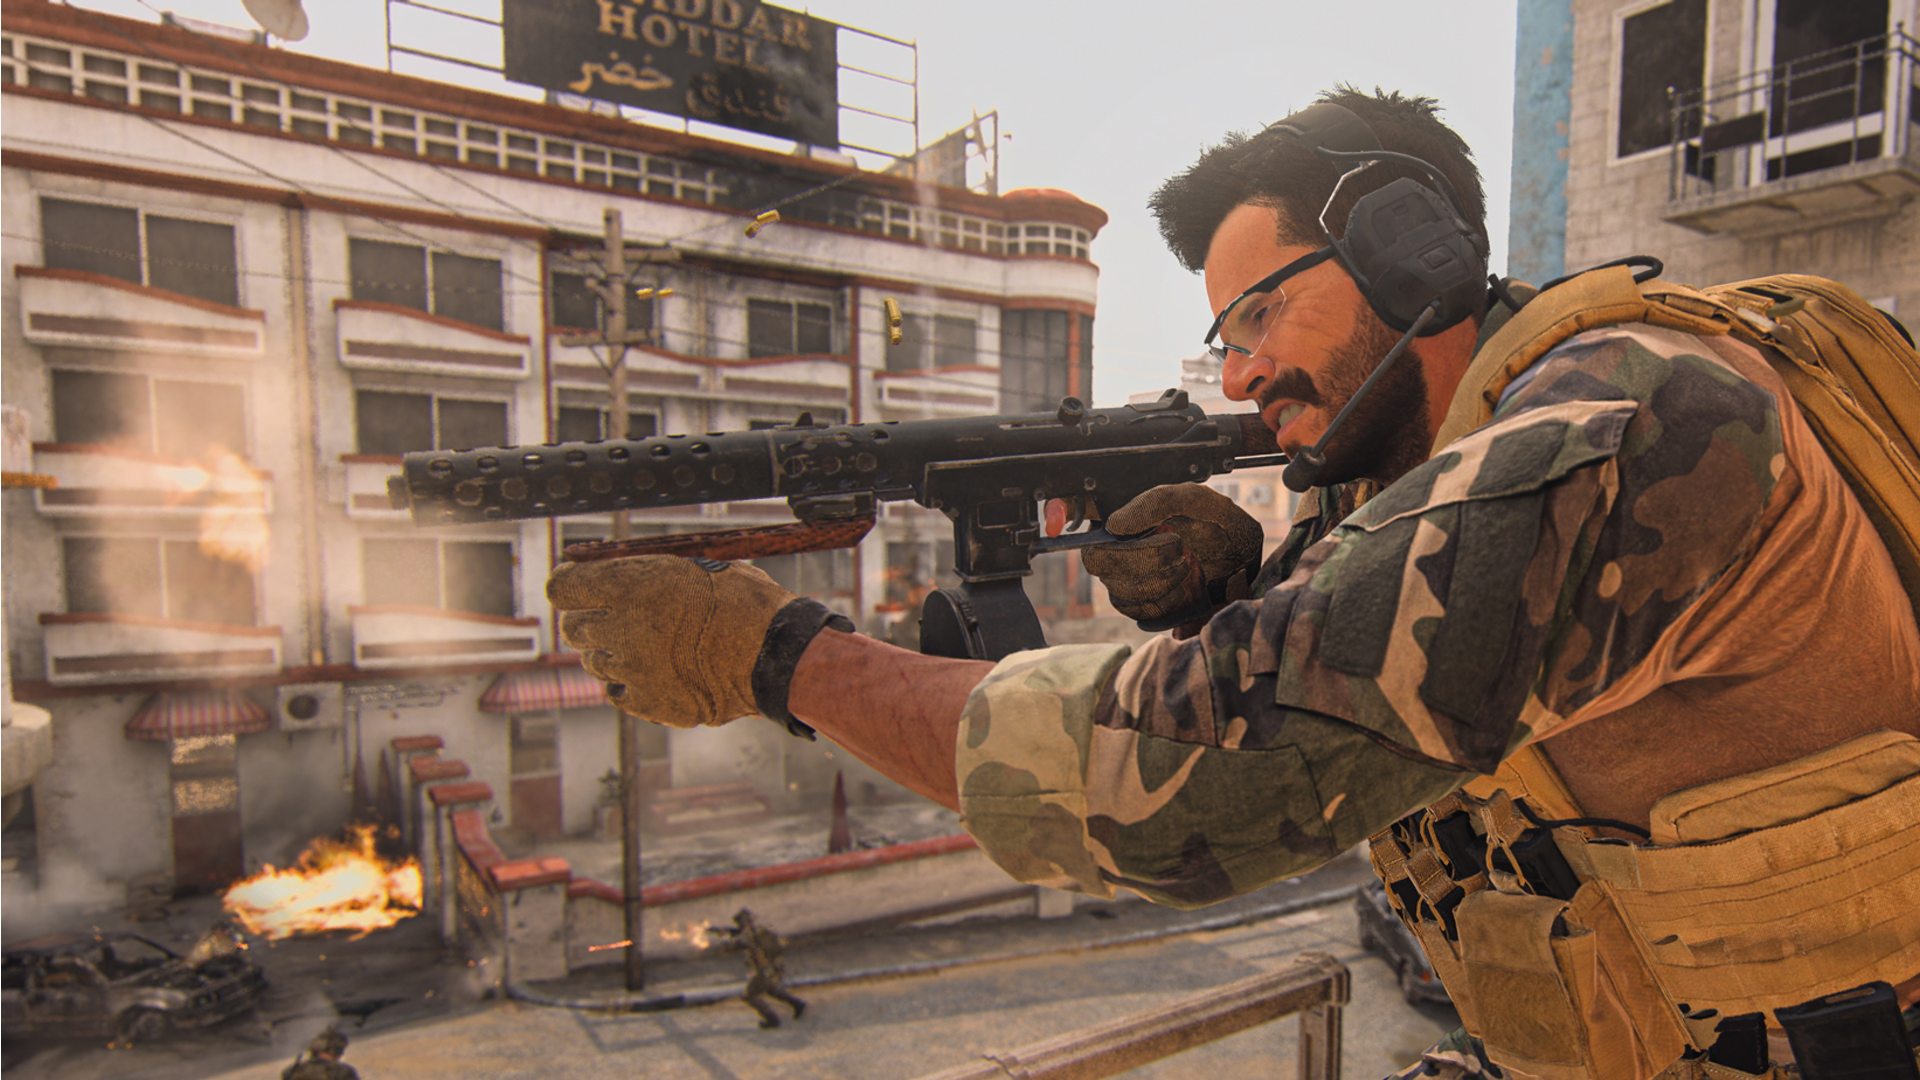 Modern Warfare 2 Beta Lands in Mid-August, According to